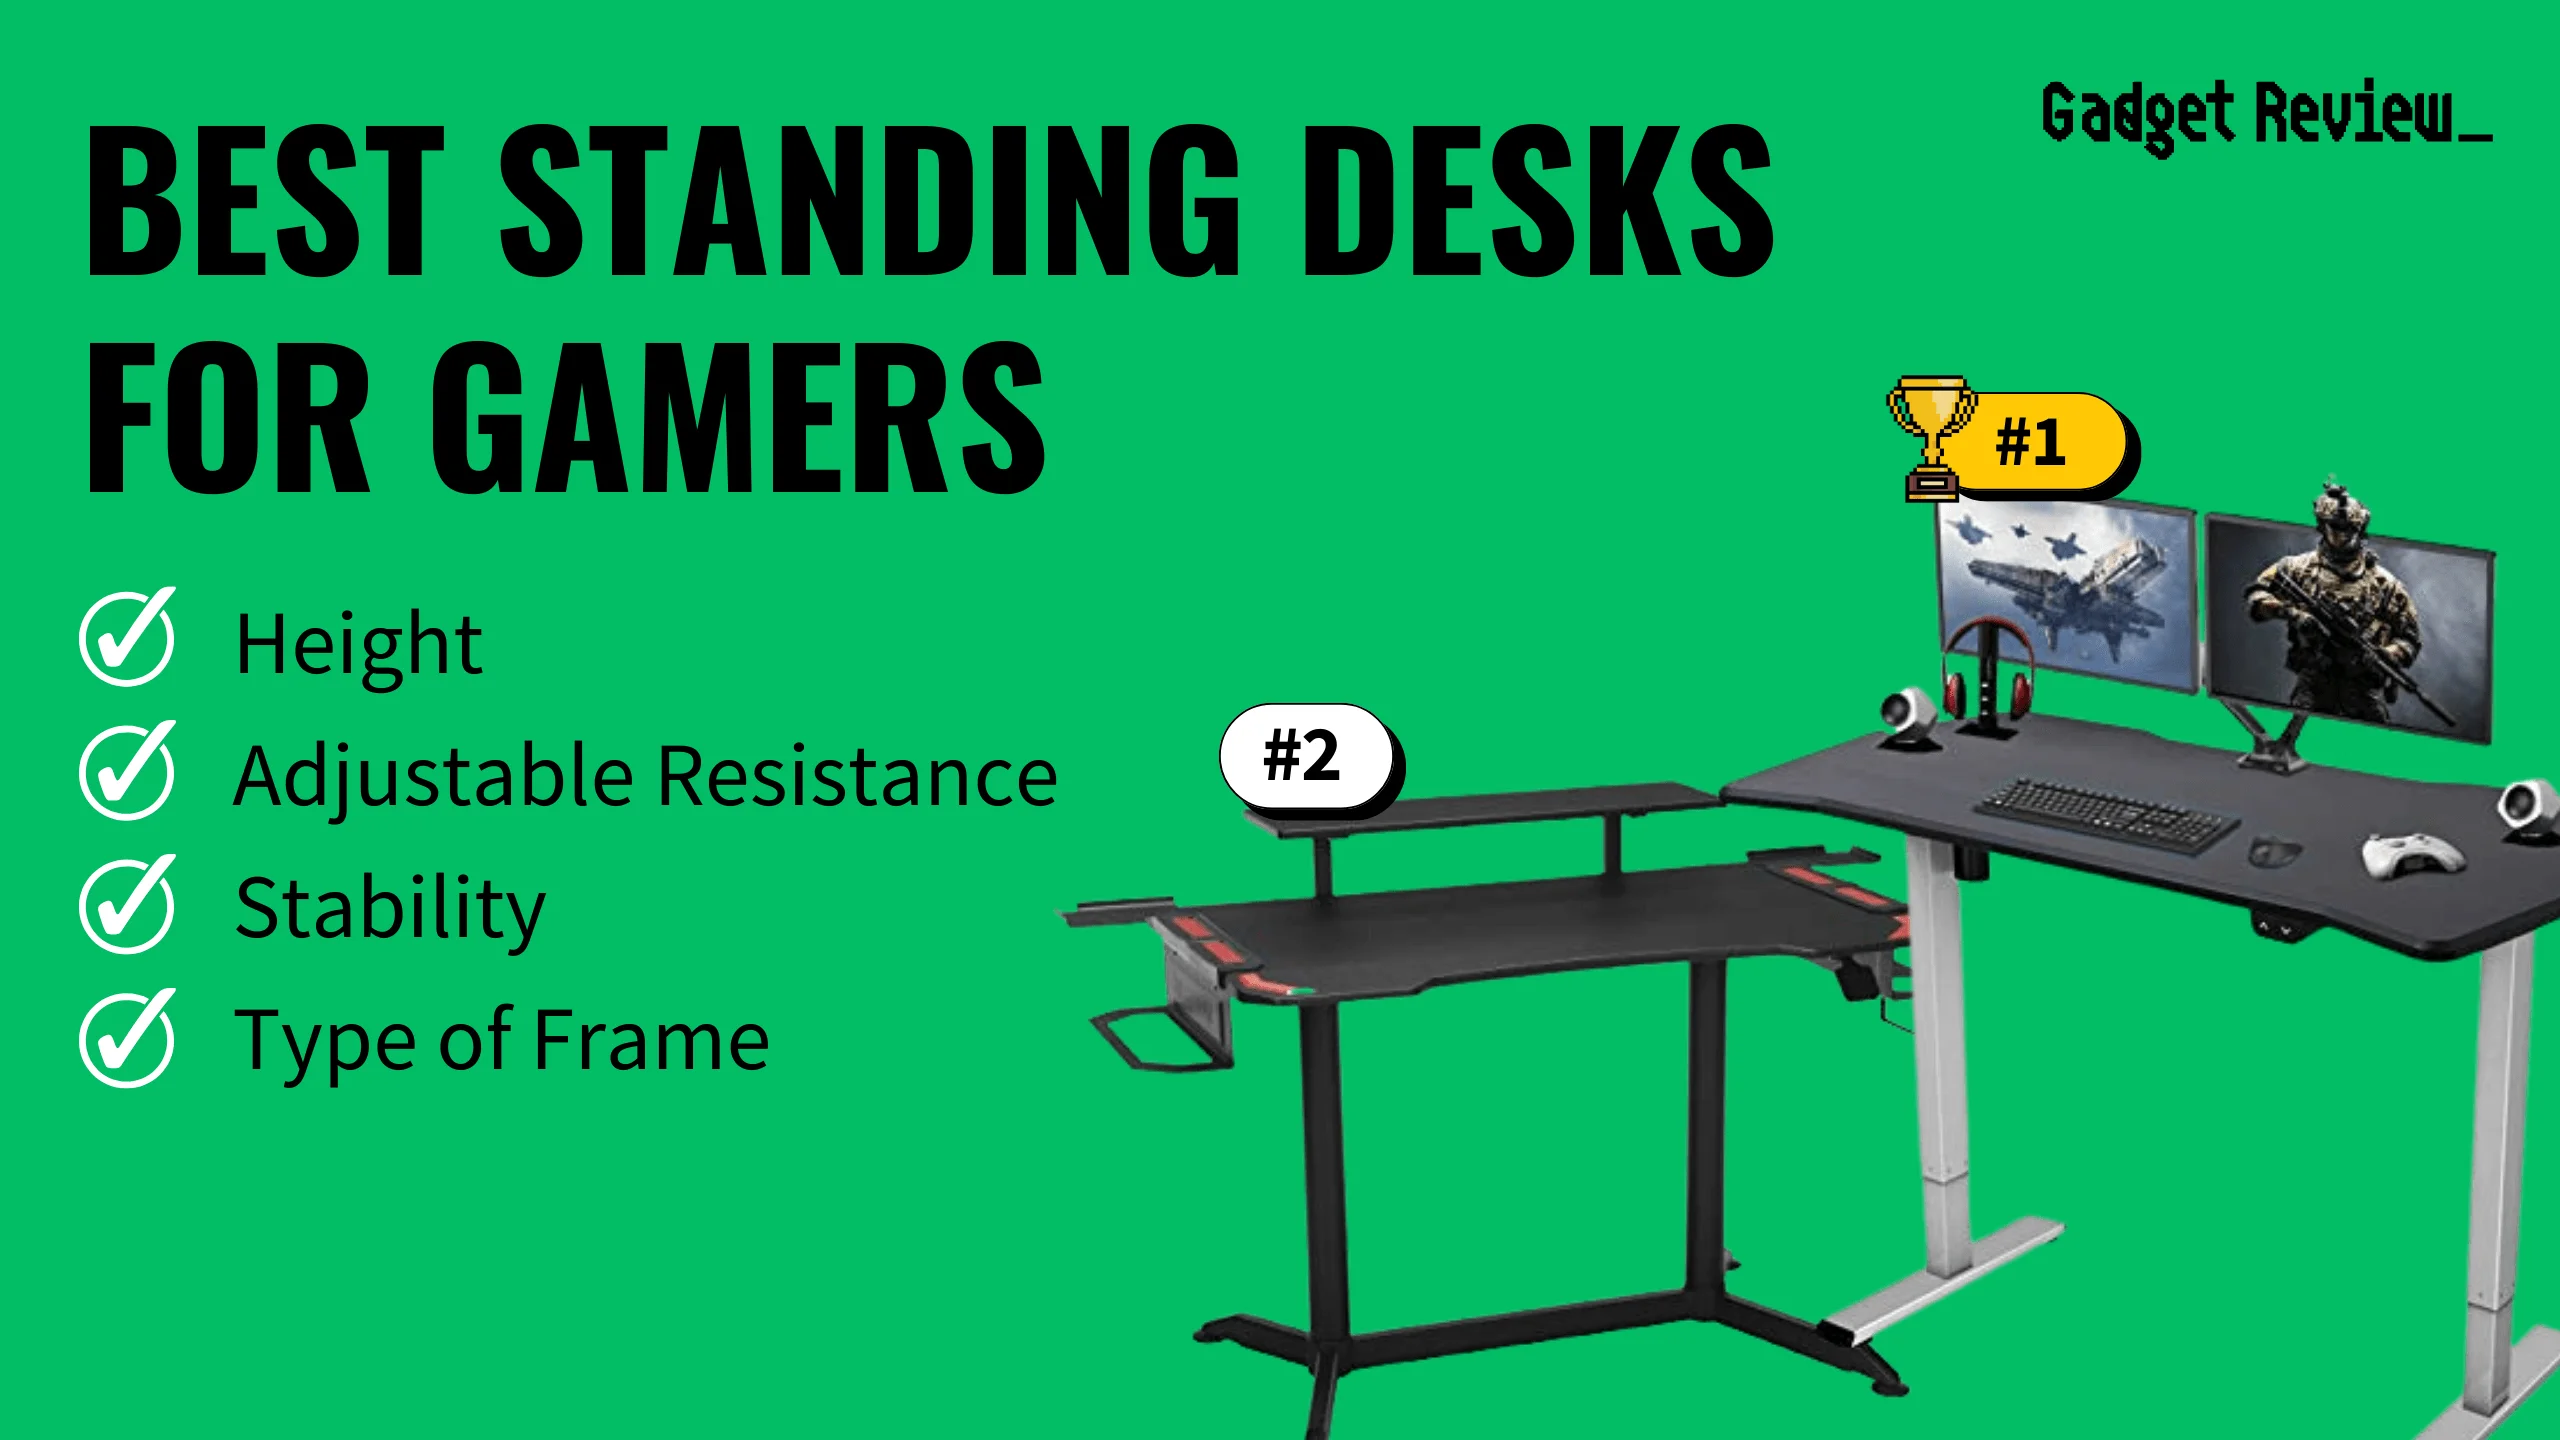 Best Standing Desks for Gamers